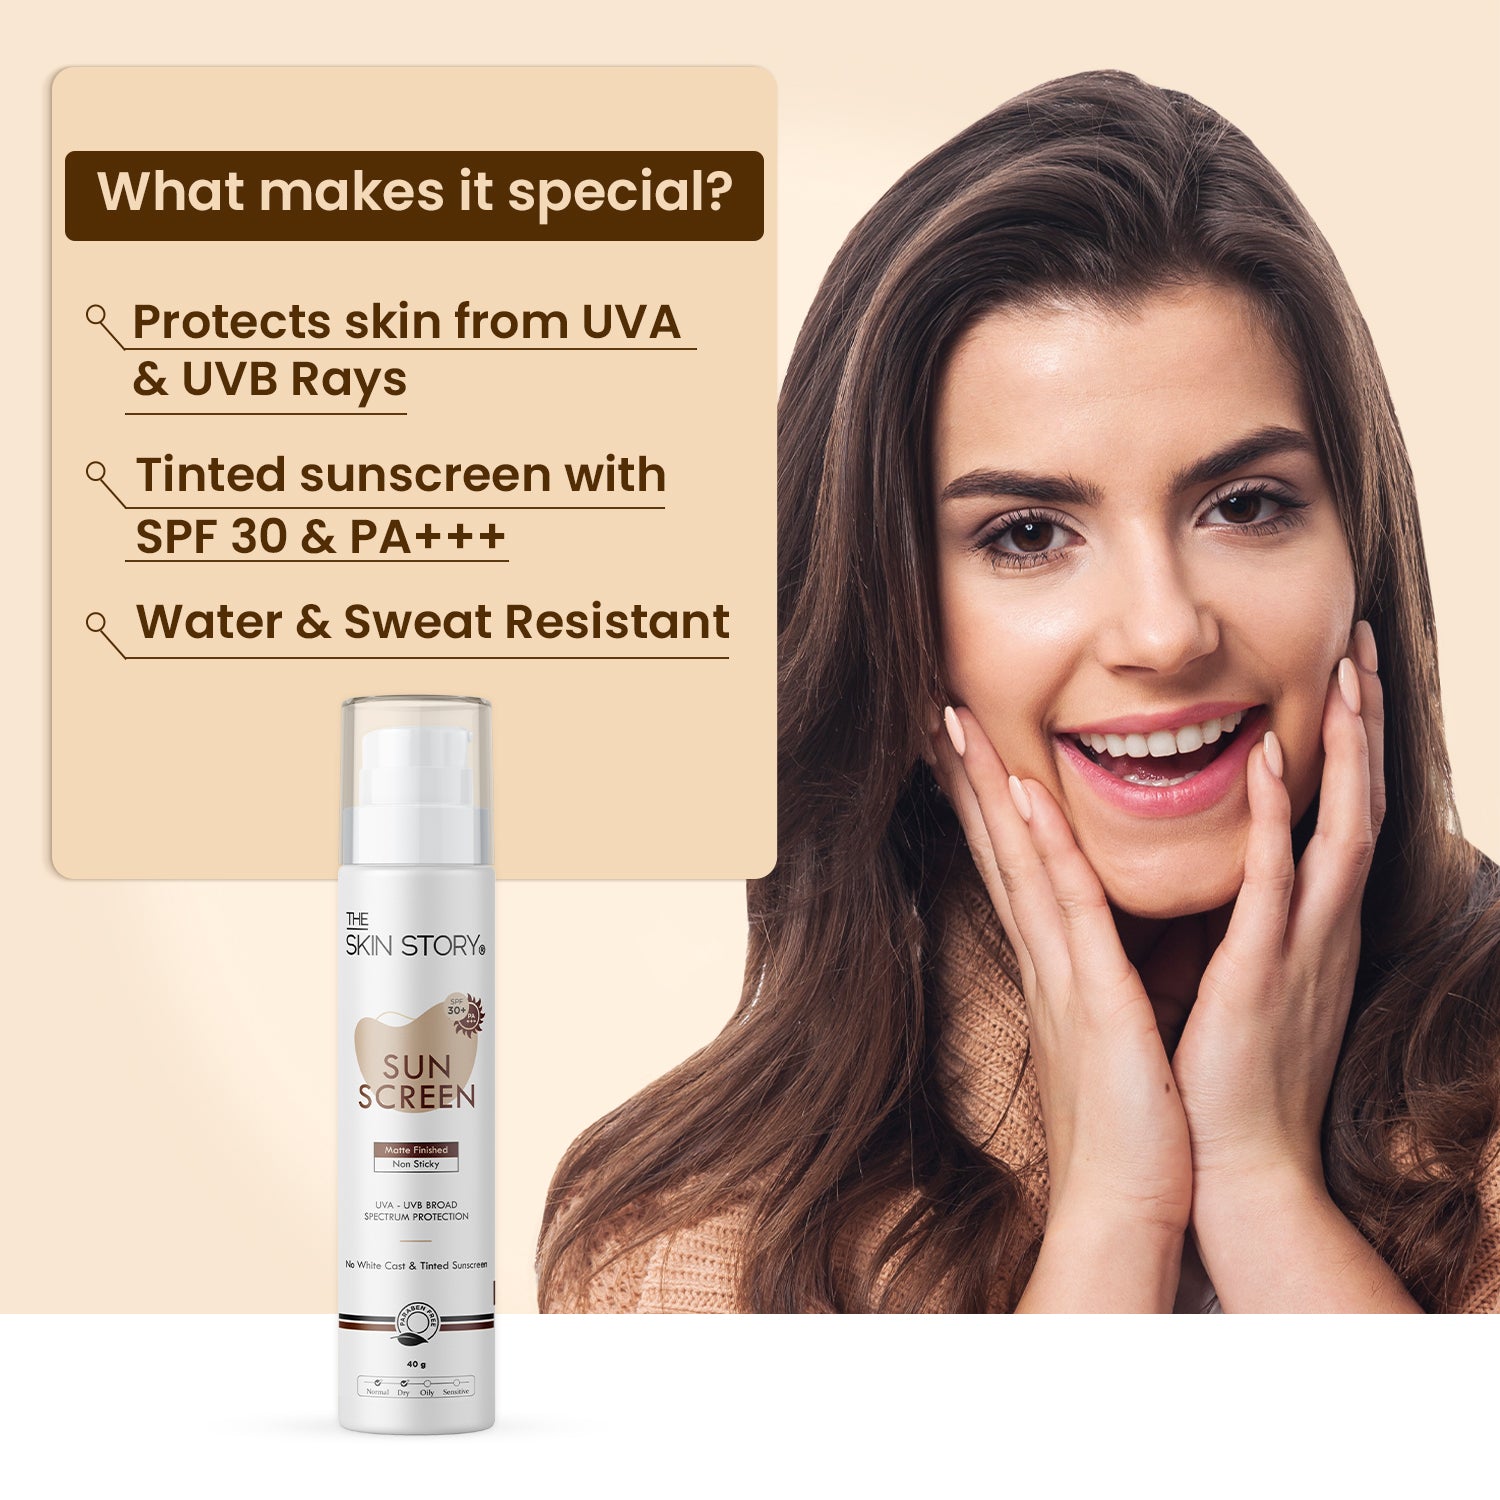 The Skin Story Sunscreen SPF 30 | Broad Spectrum | UVA & UVB Protection | Light & Non Sticky Formula , 40g